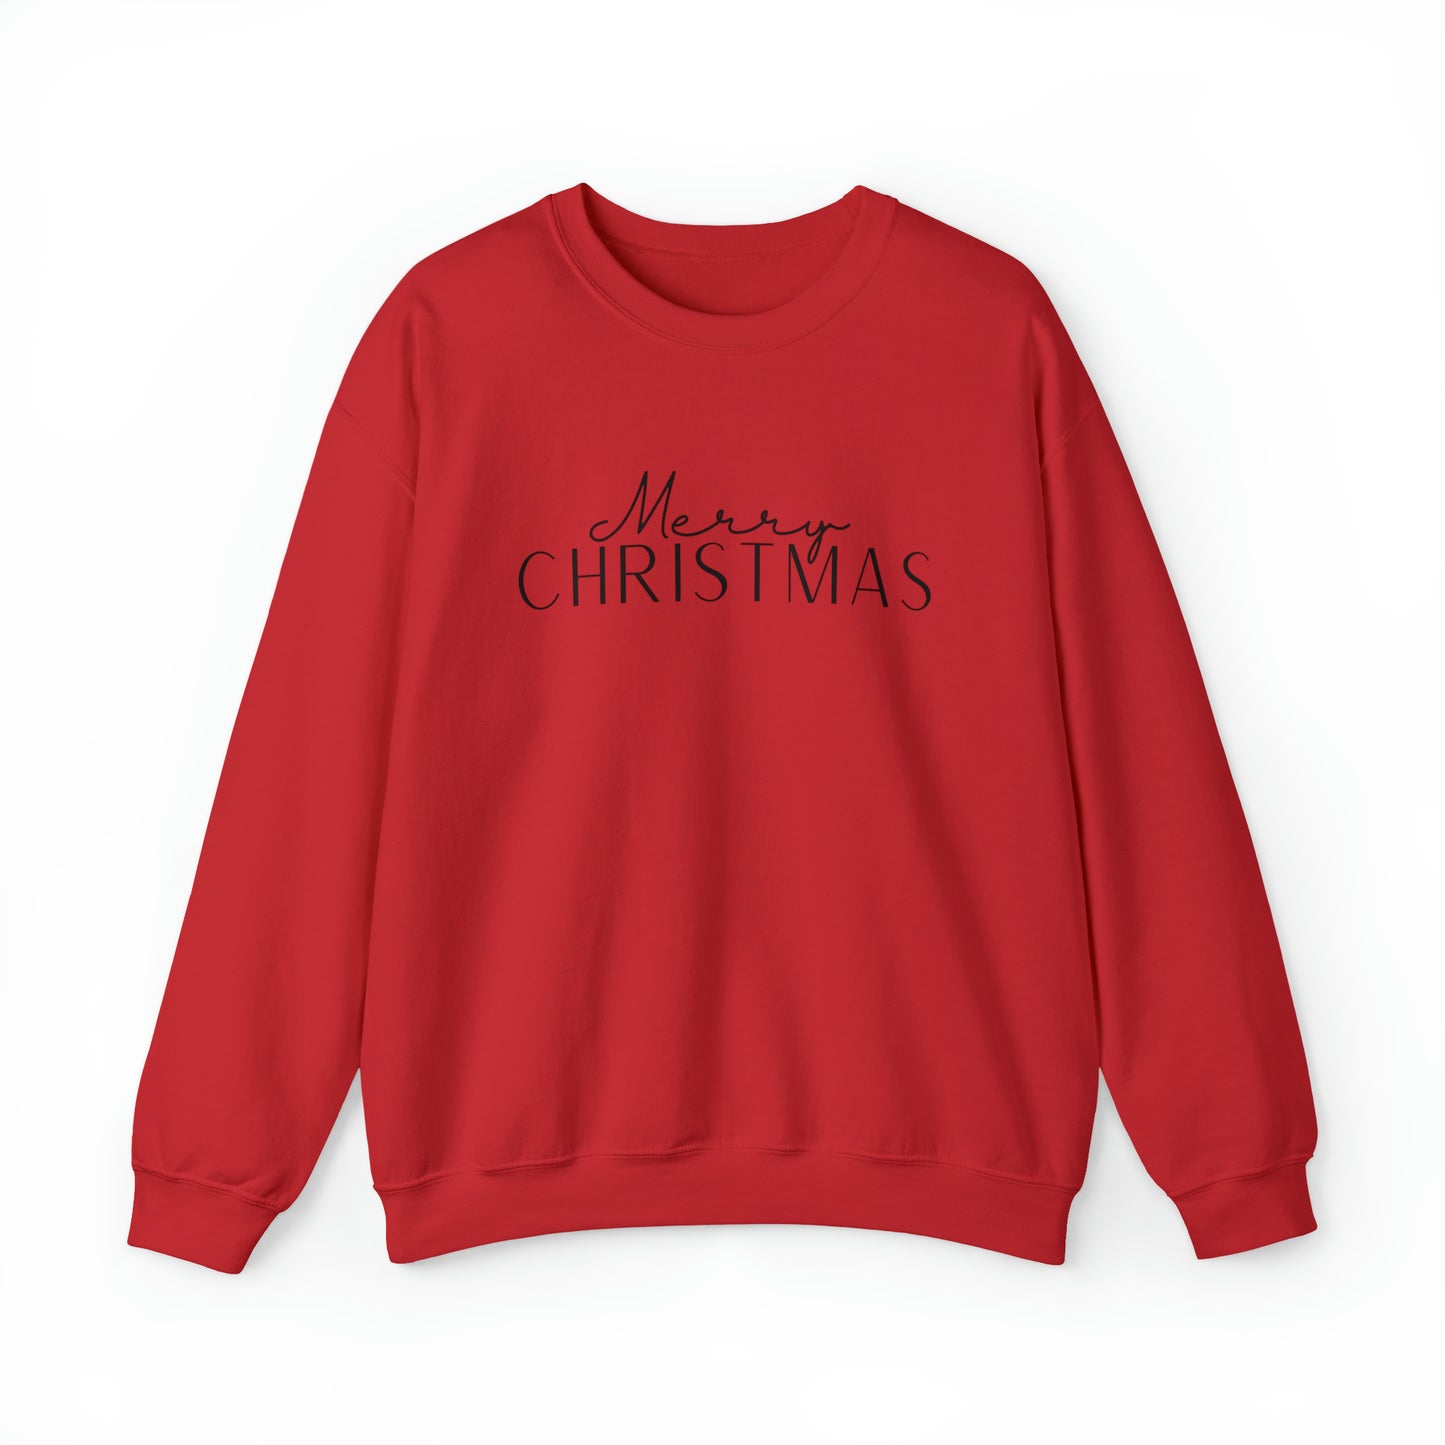 Merry Christmas Sweatshirt, Simple Text